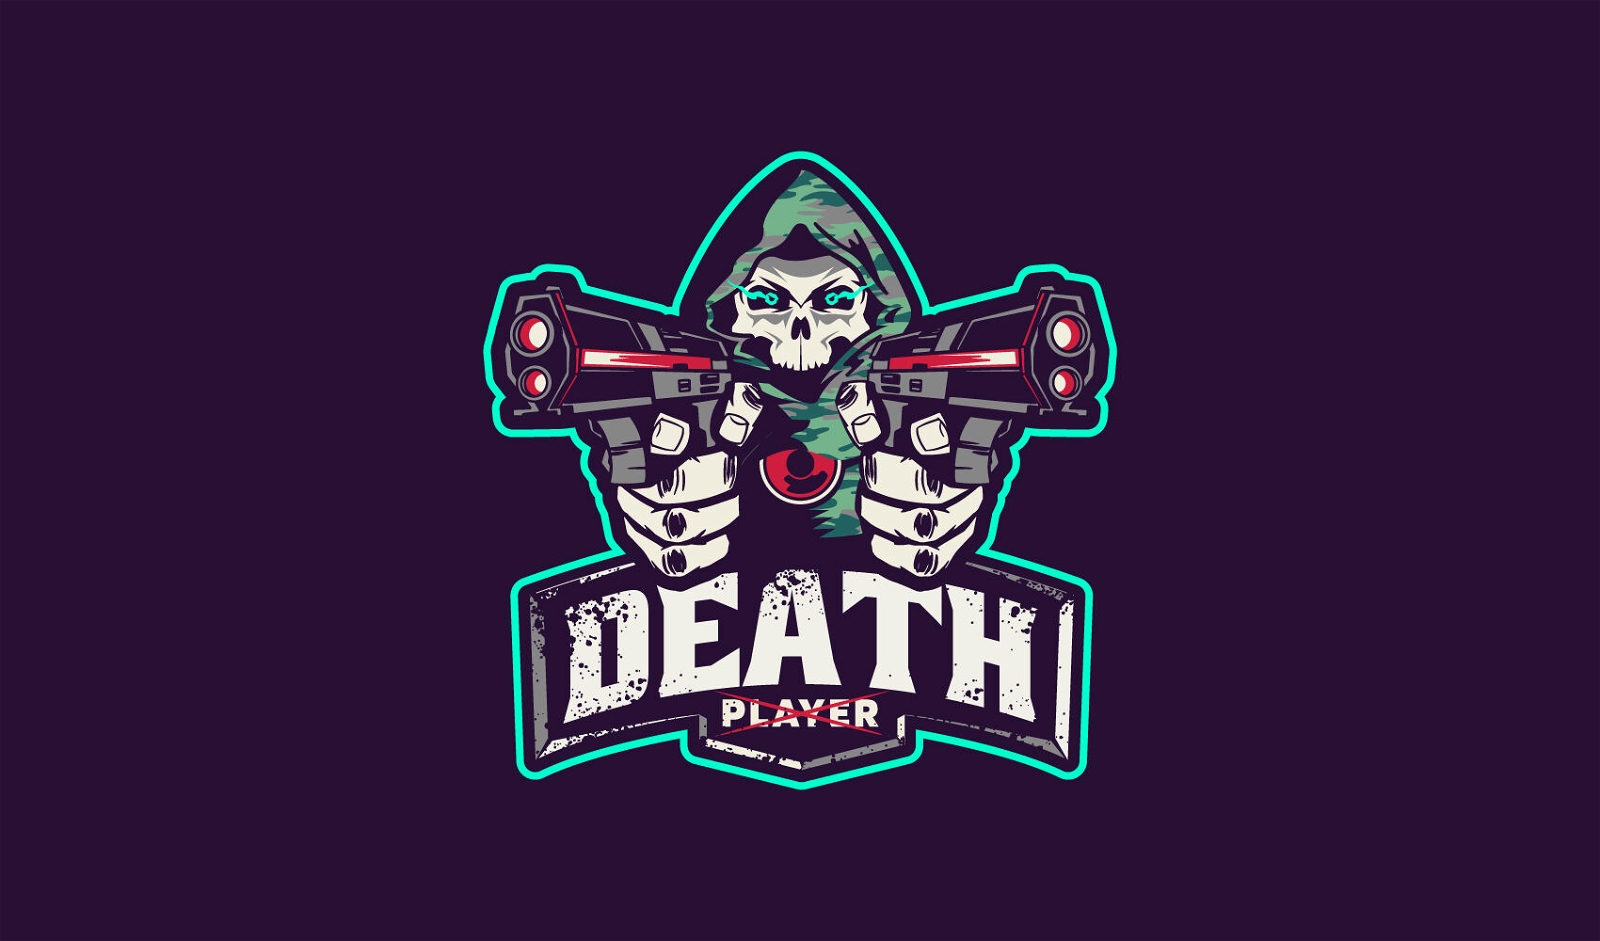 Death player logo design